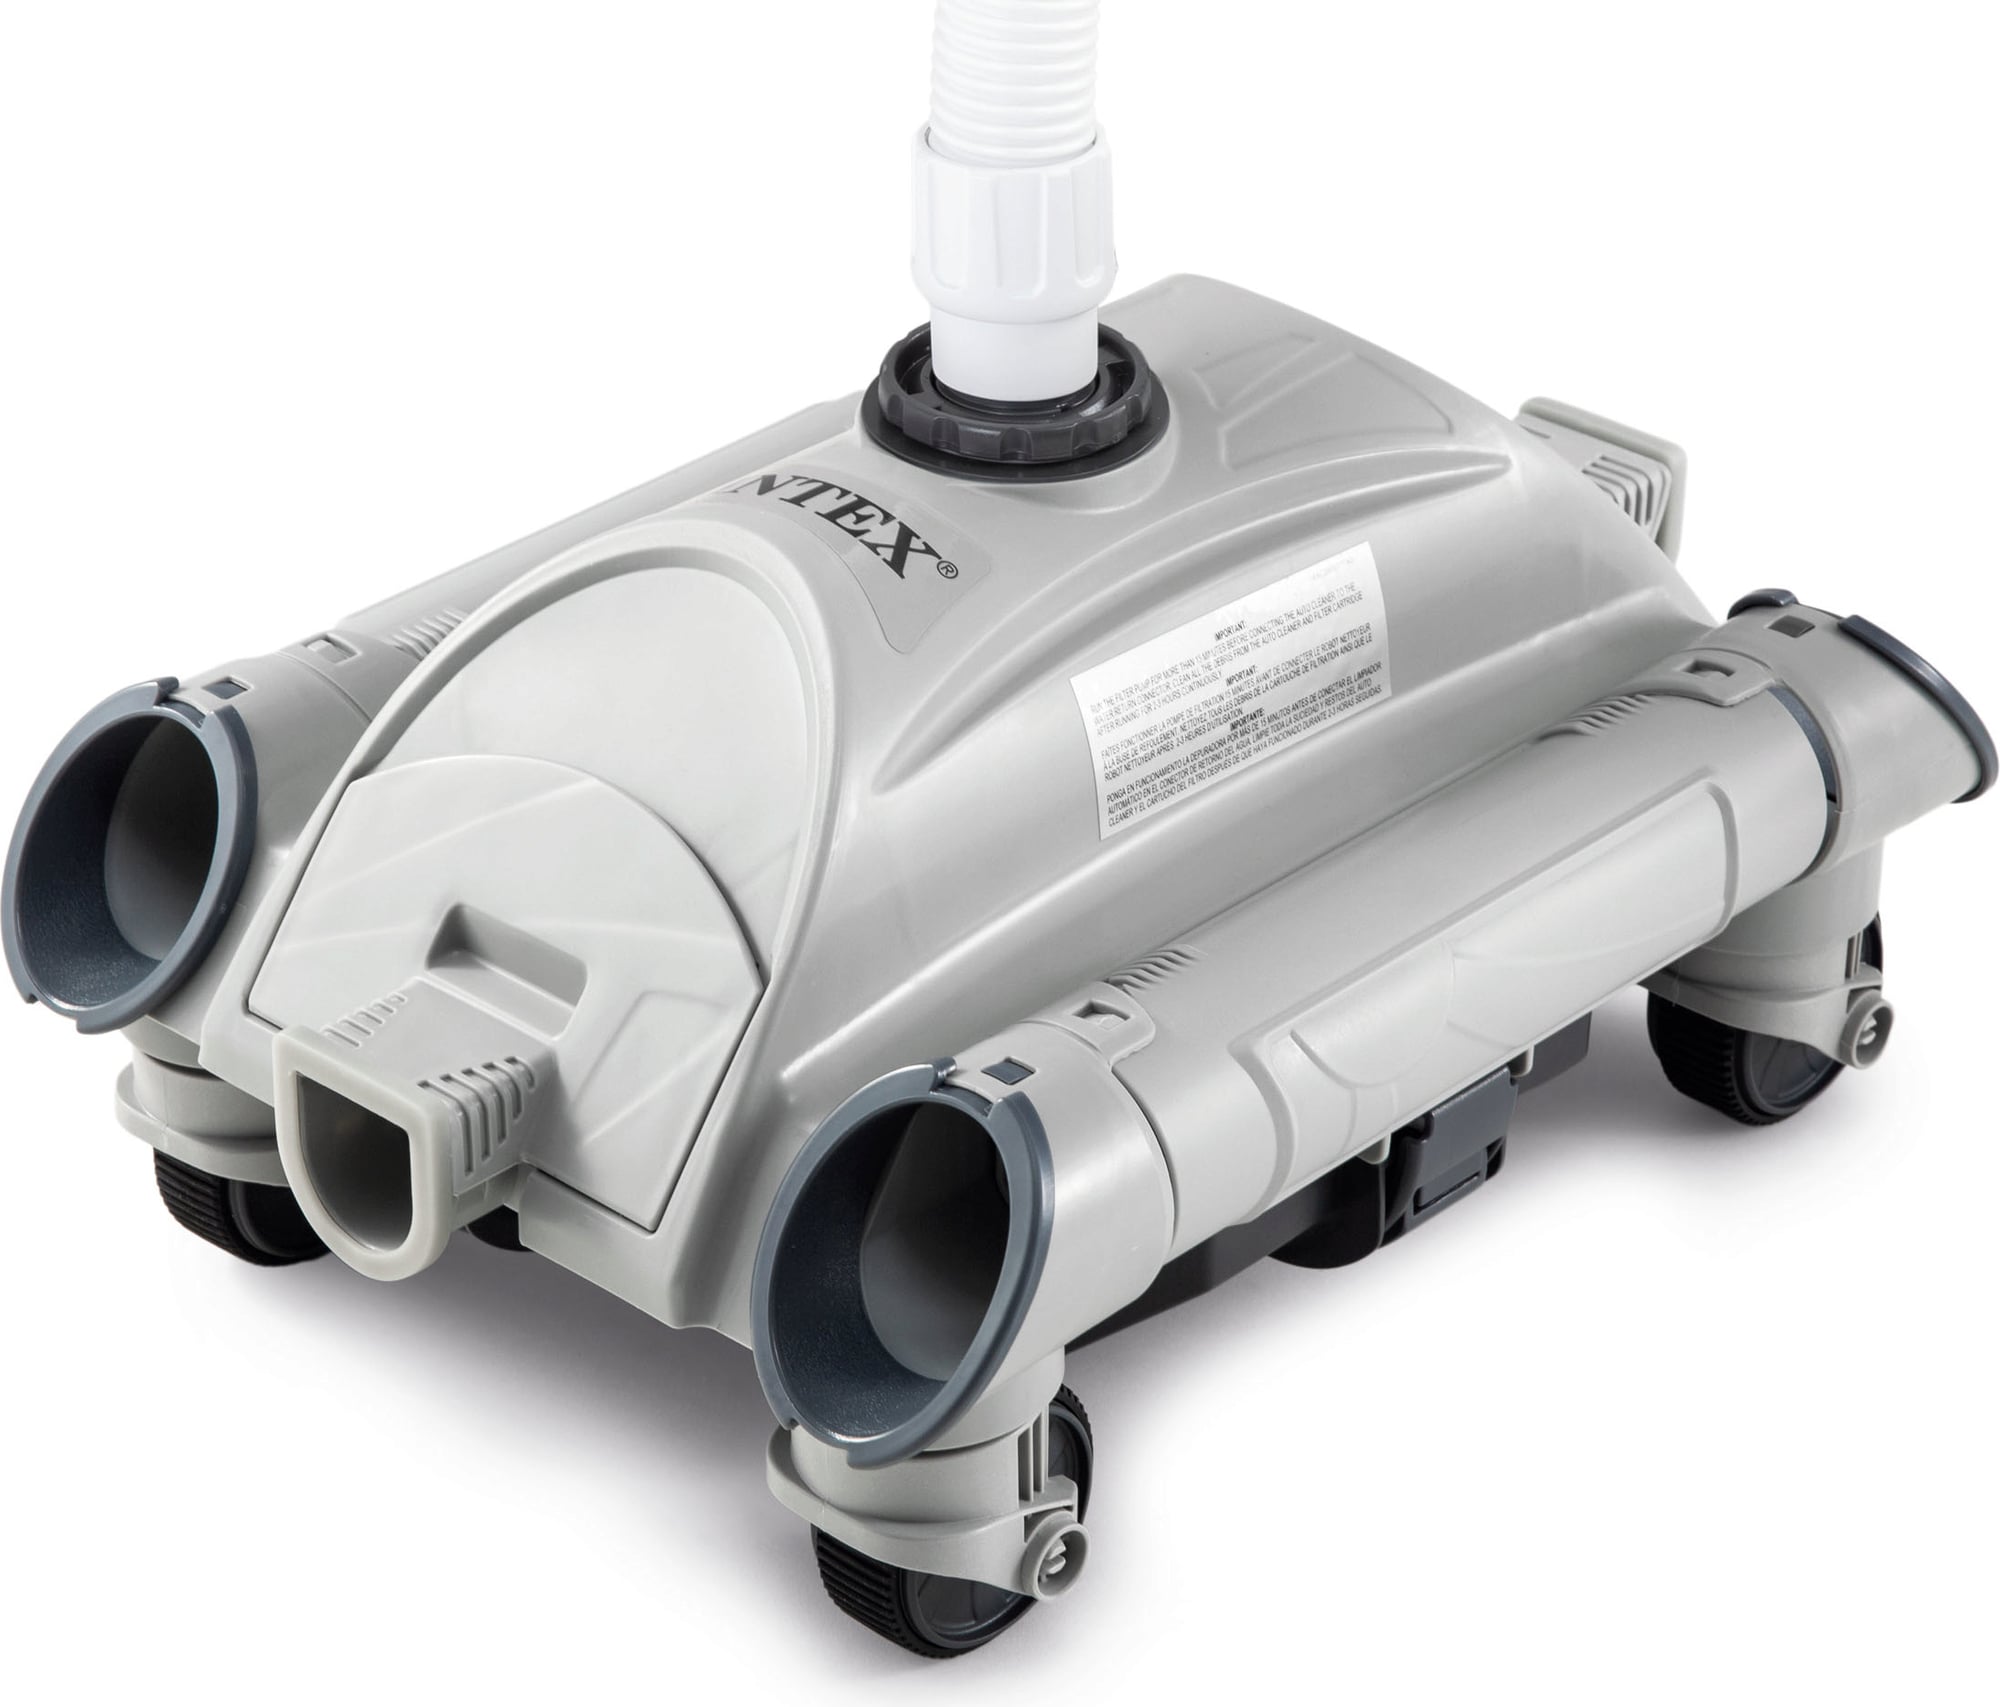 Intex Robot per Piscina - Auto Pool Cleaner - Auto Pool Cleaner con tubo